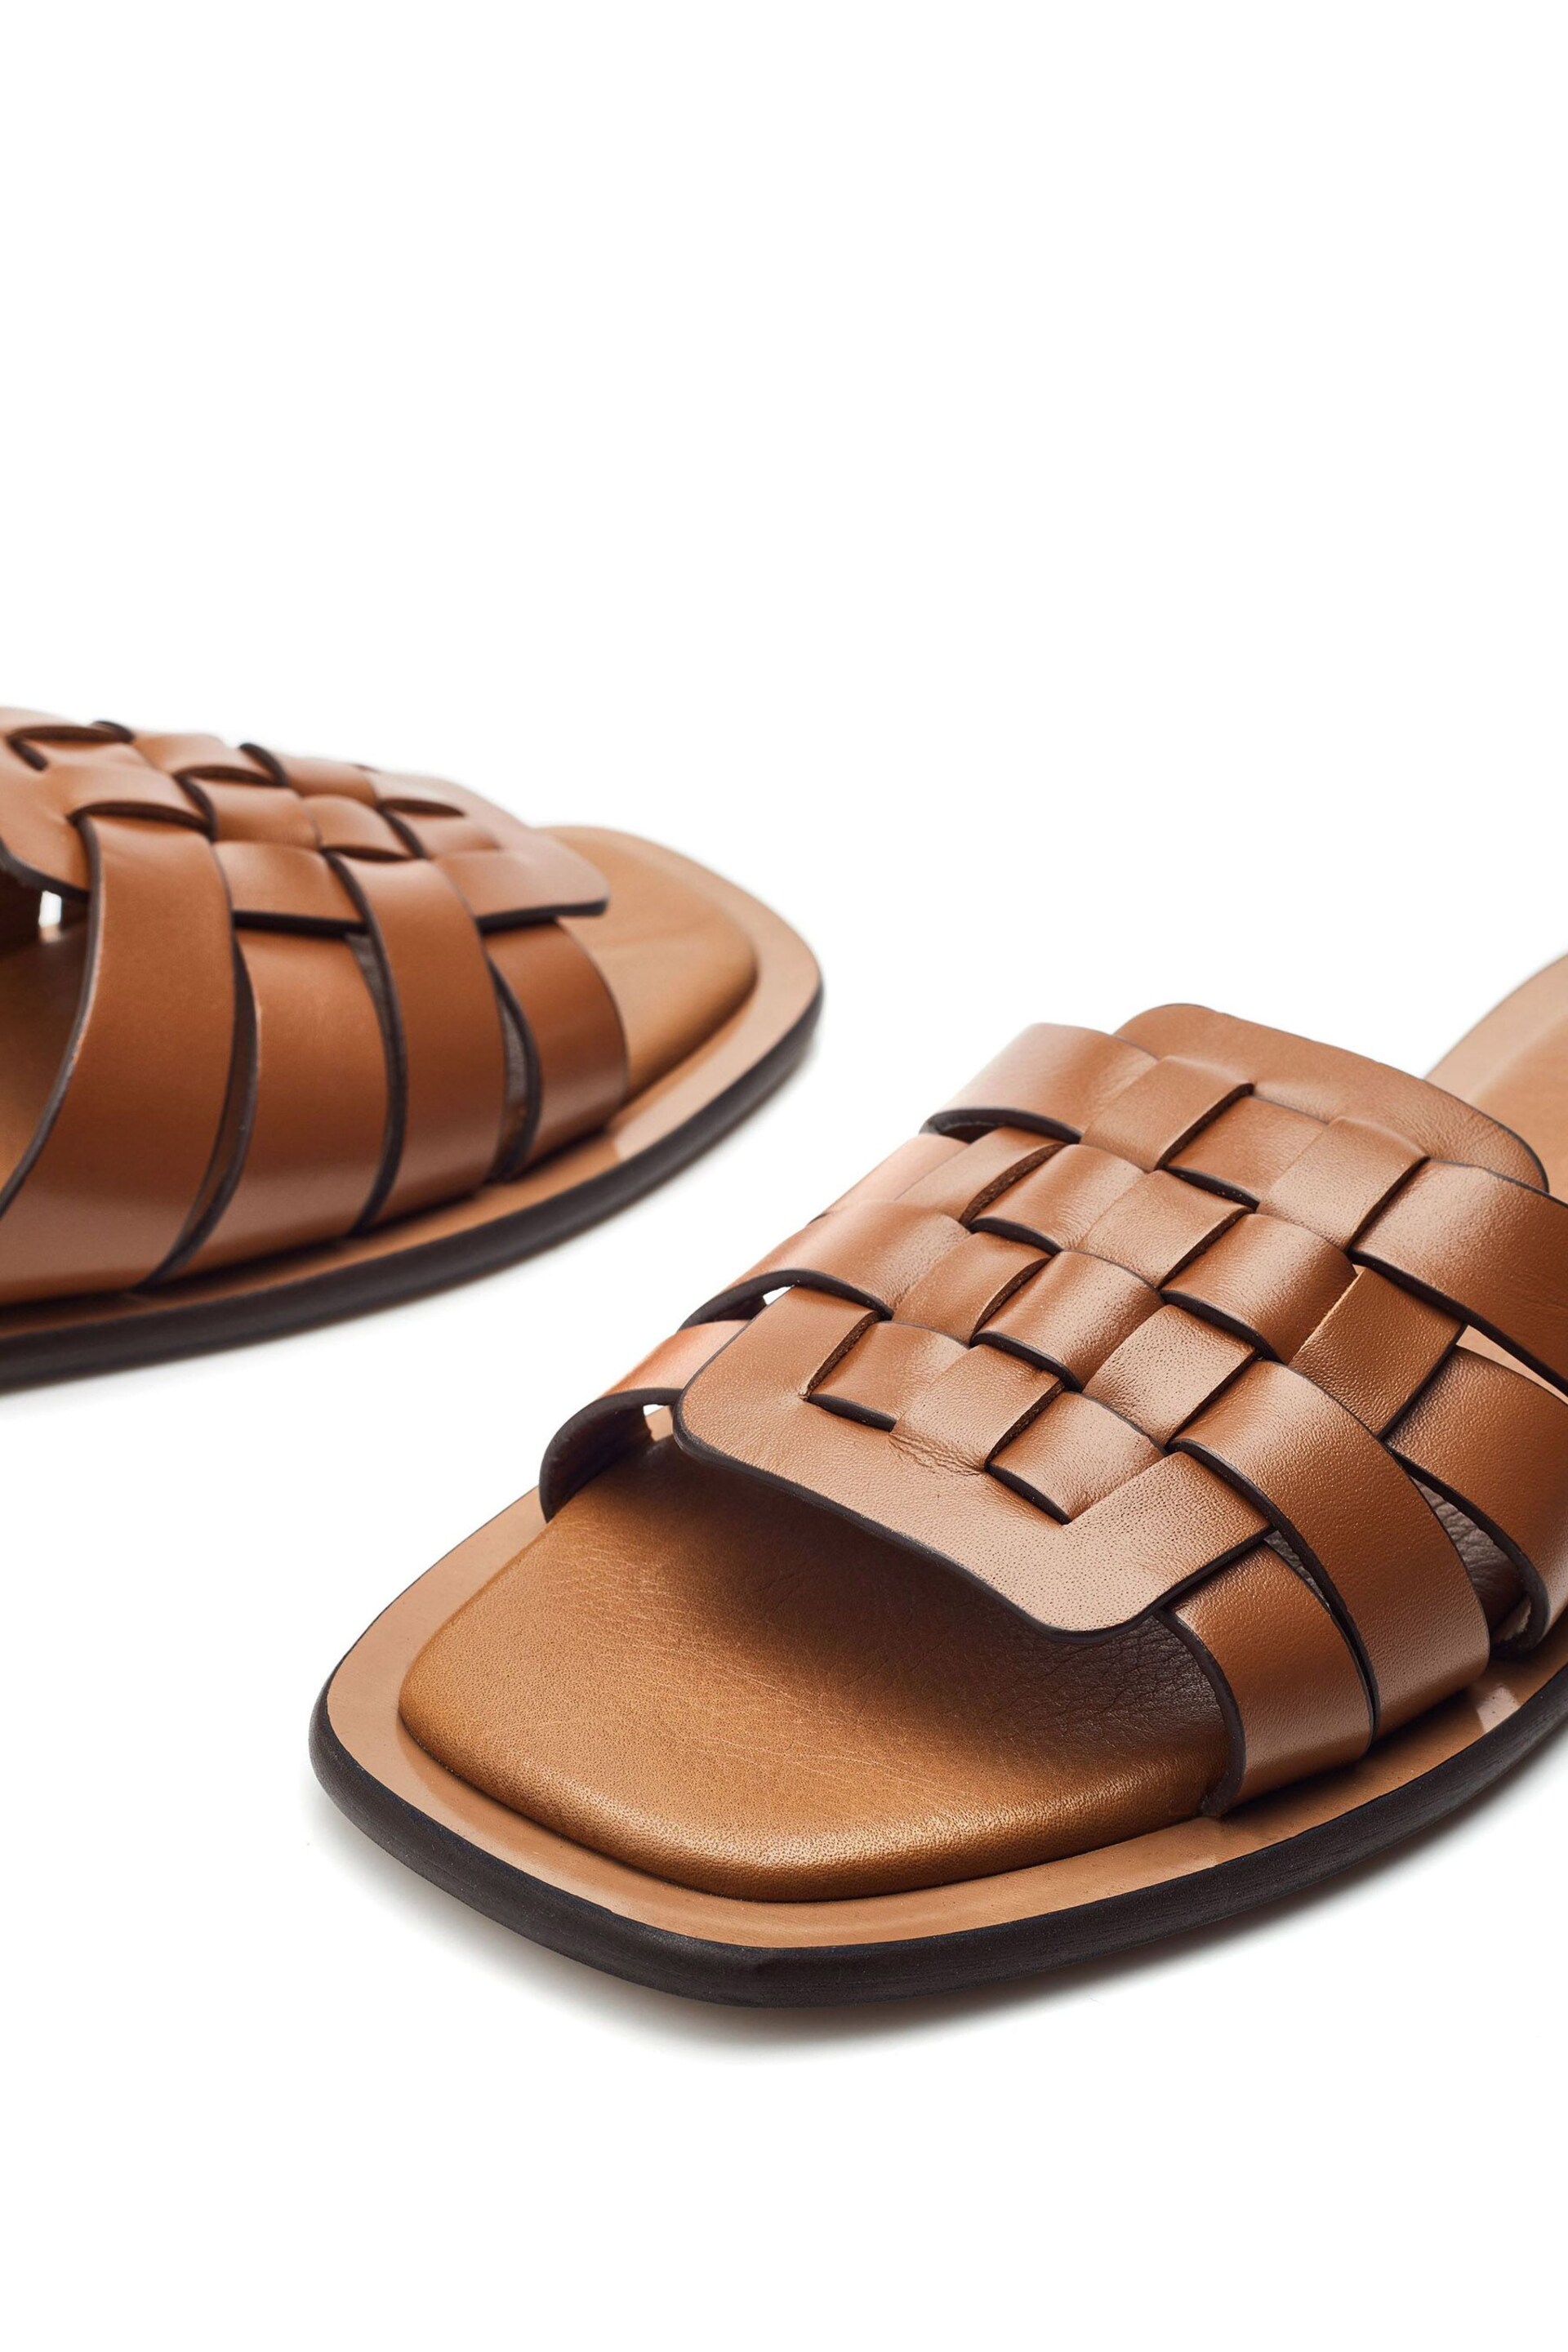 Moda in Pelle SH Athol Woven Vamp Flat Mule Sandals - Image 4 of 4